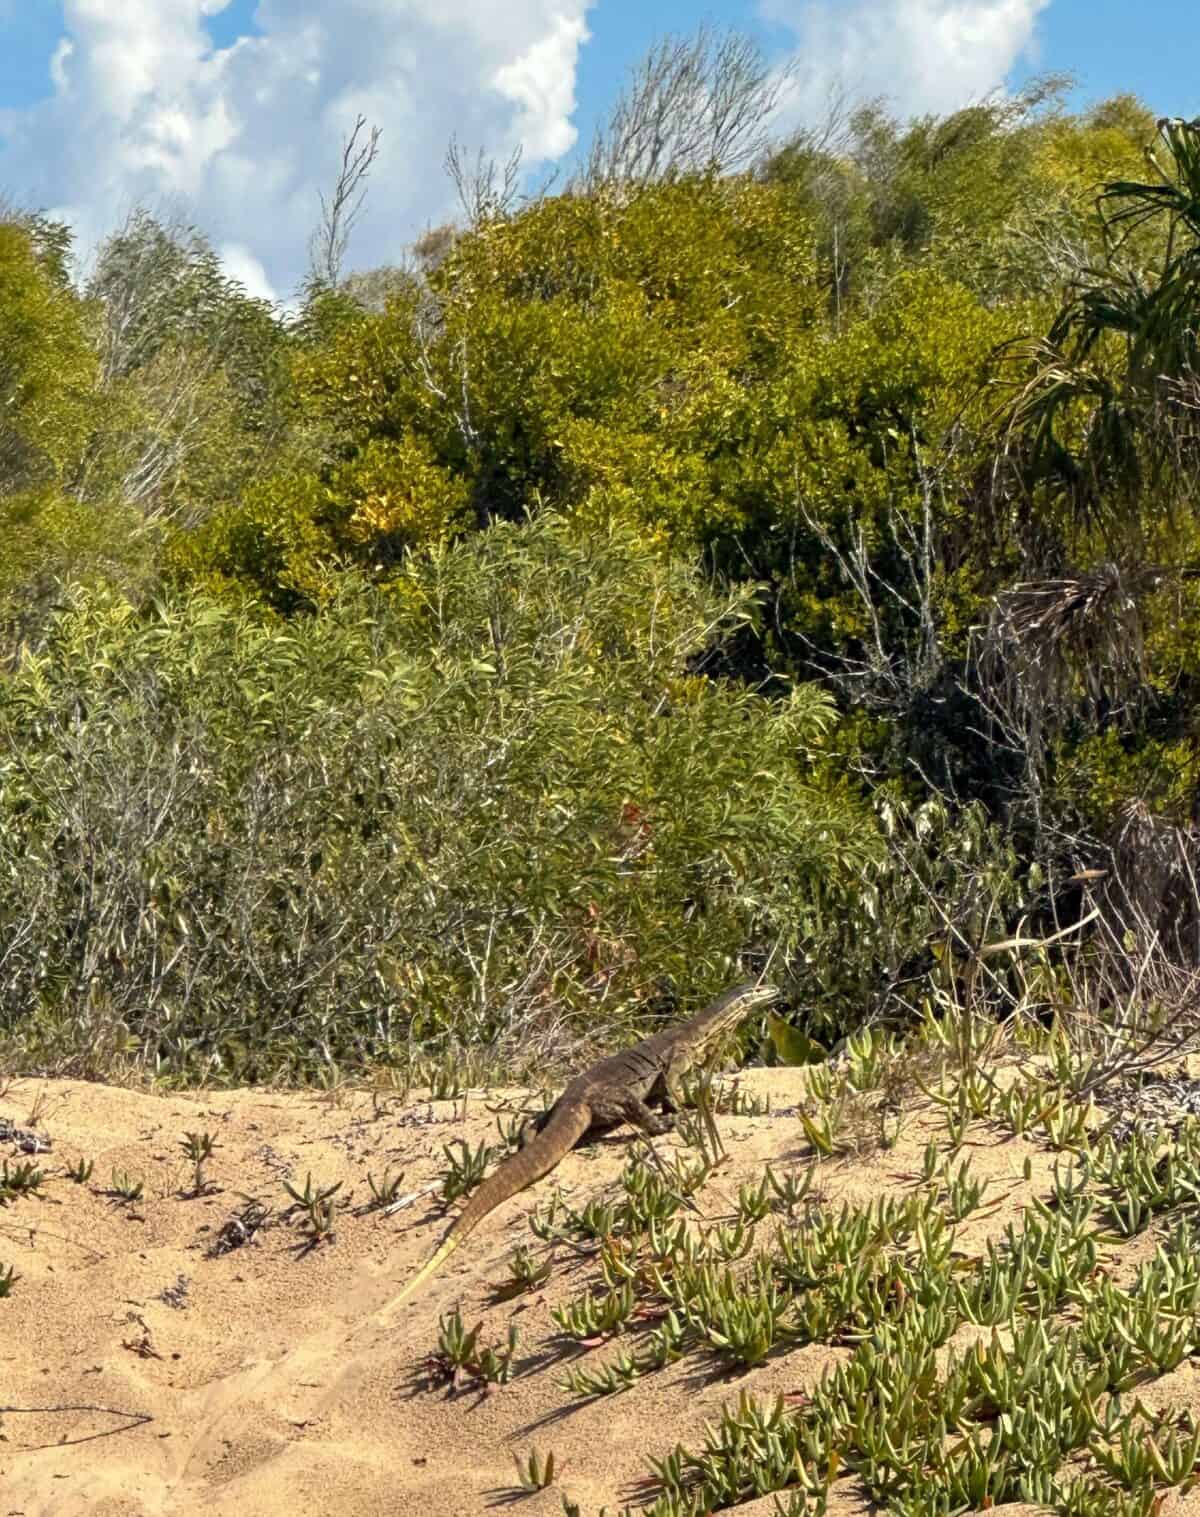 goanna on dunes at Kinkuna National Park 